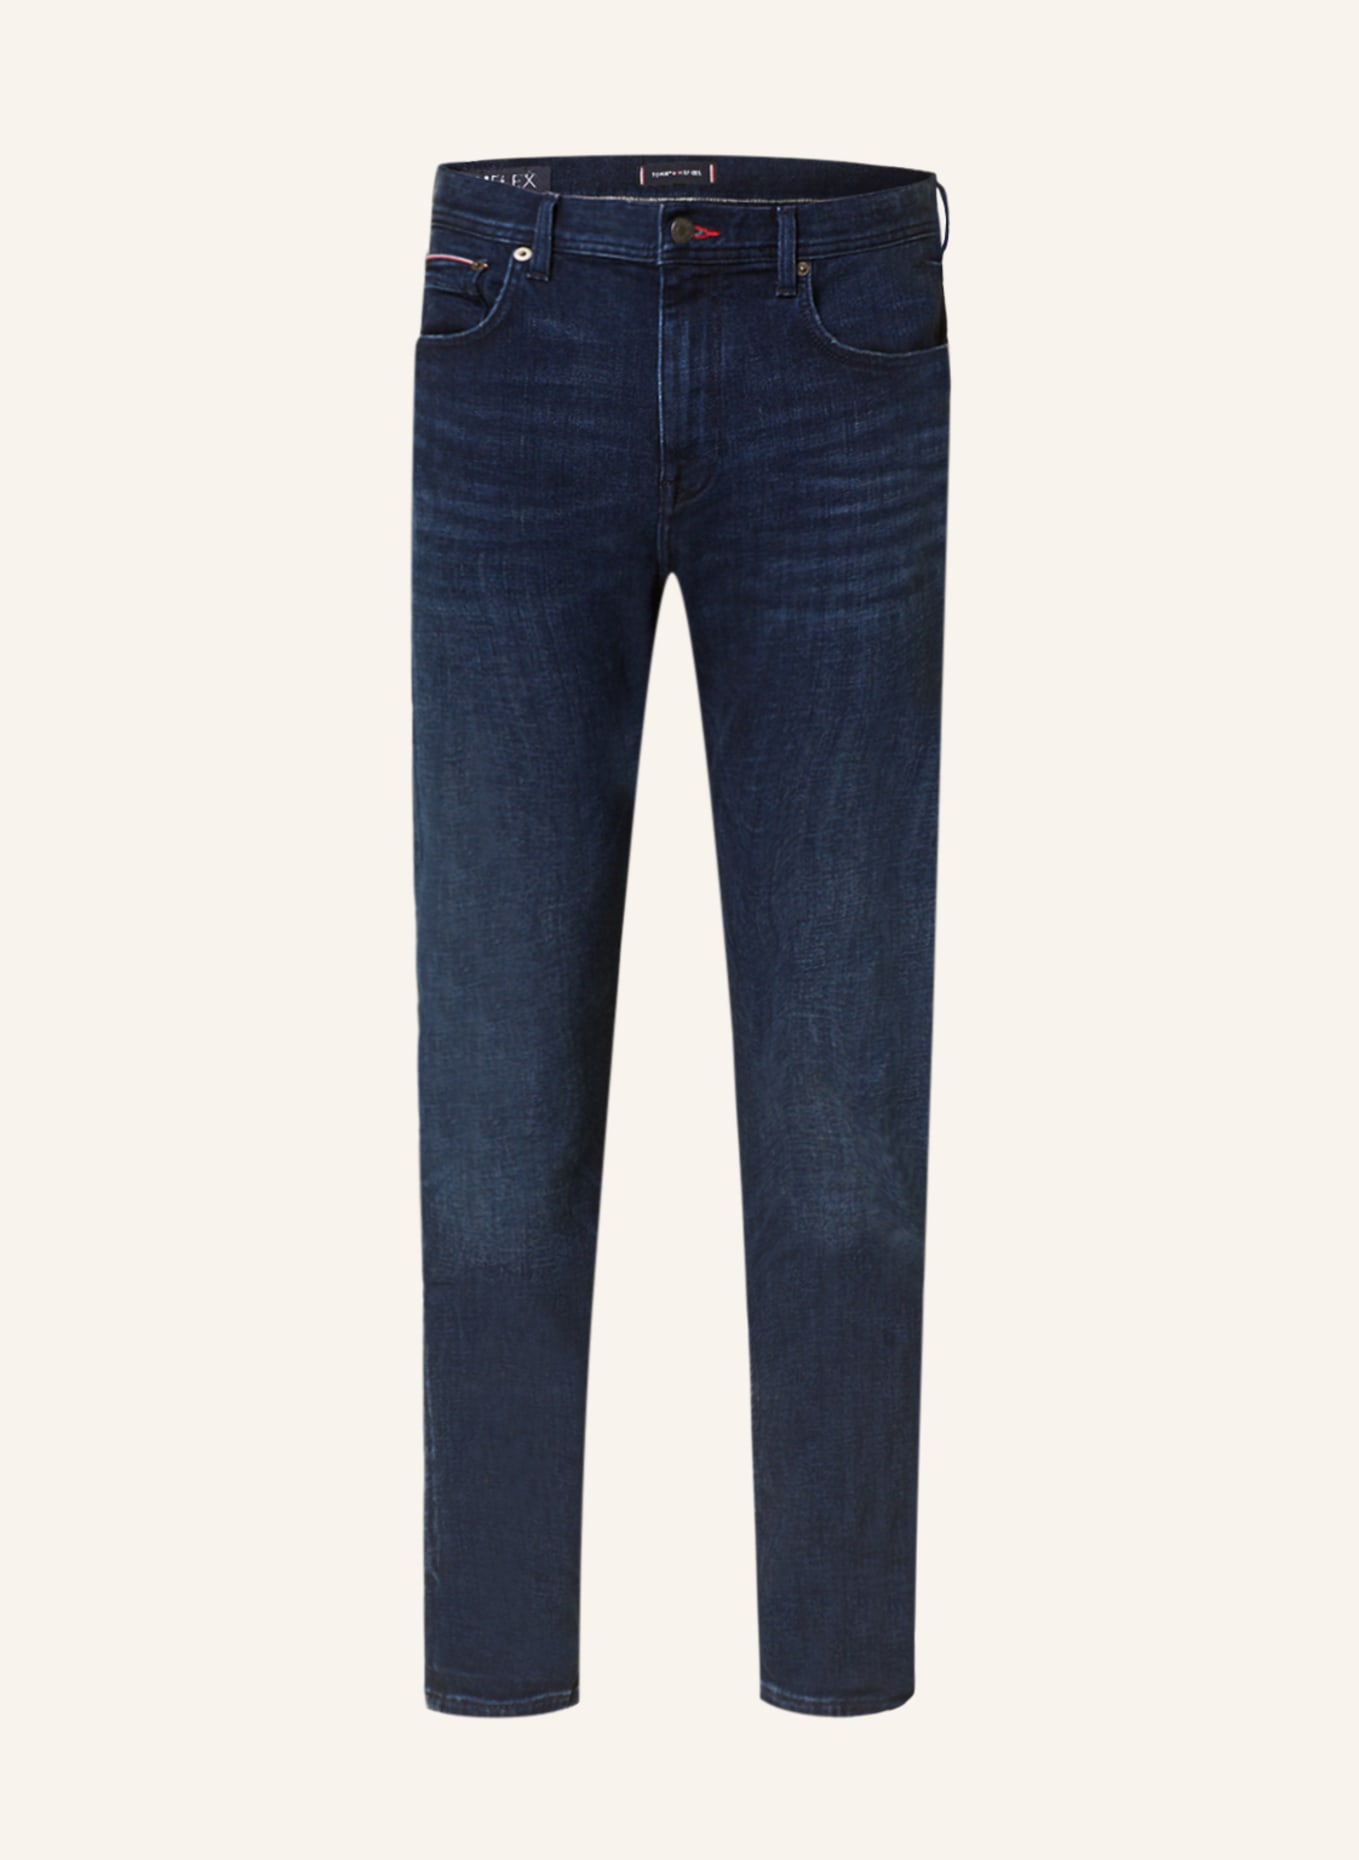 TOMMY HILFIGER Jeans HOUSTON Slim Tapered Fit, Farbe: 1BO Nepon Indigo (Bild 1)